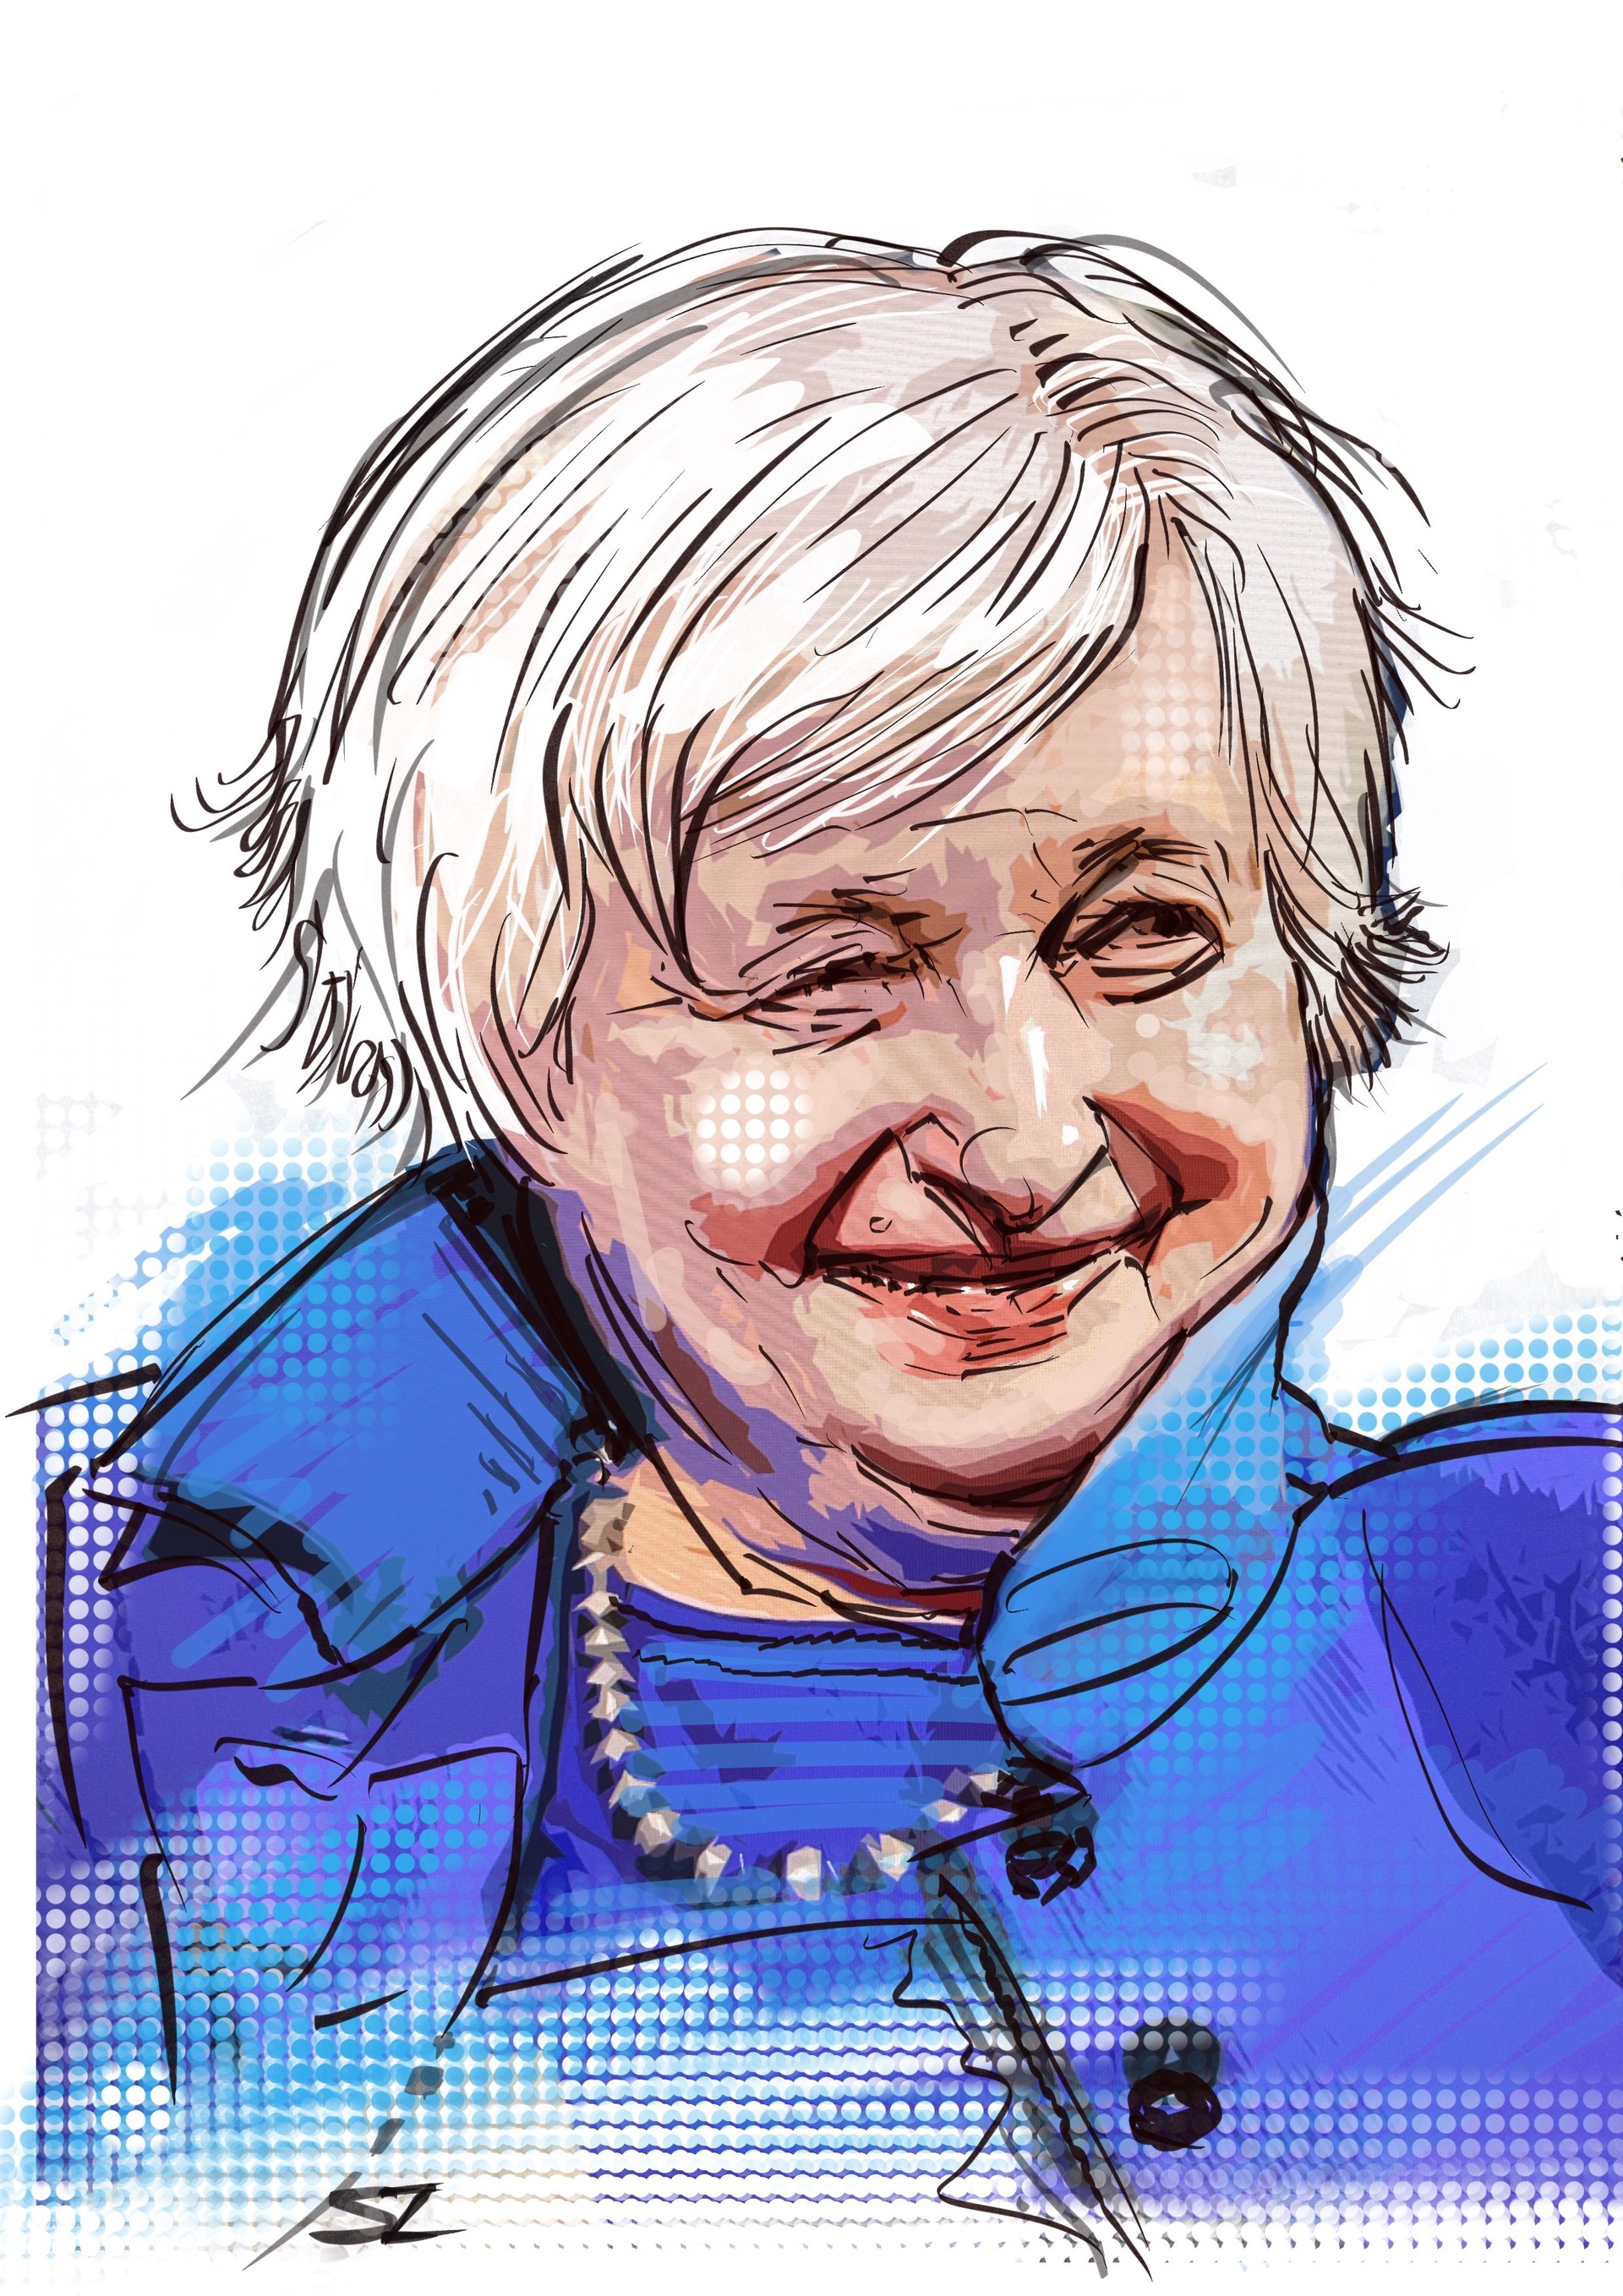 Janet Yellen, US Treasury secretary and former Fed chair